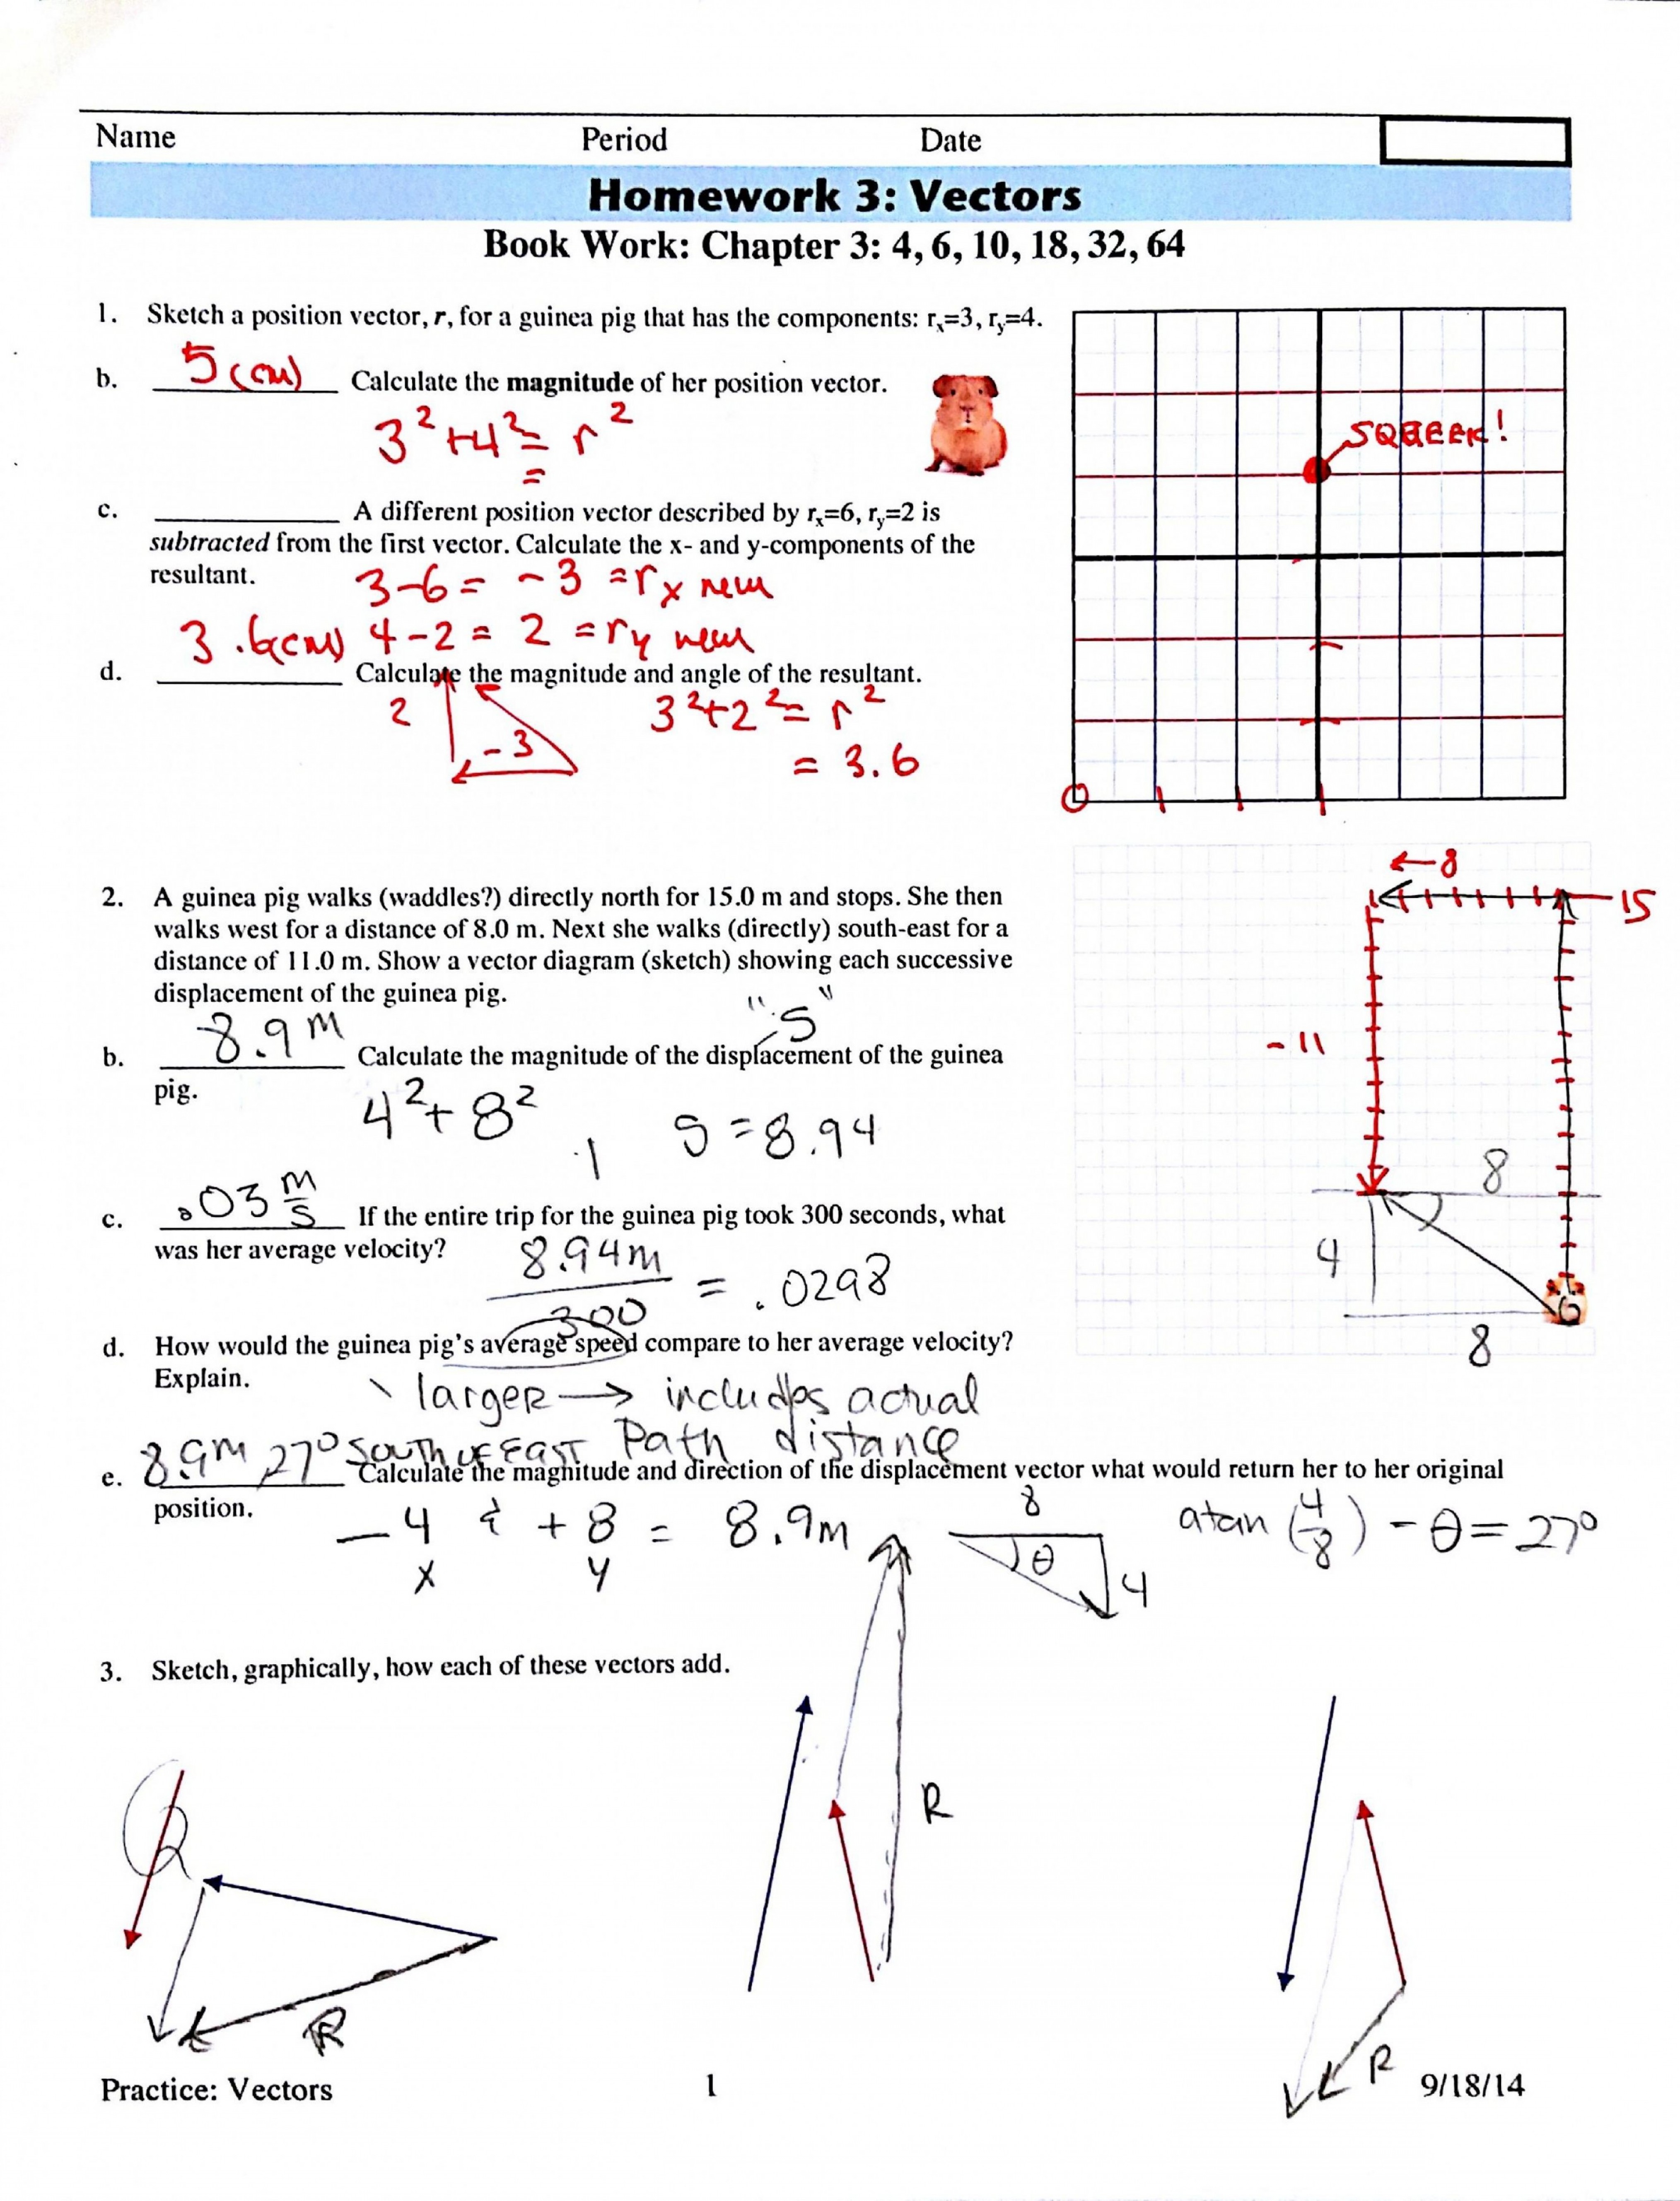 geometric representation of vectors worksheet answers